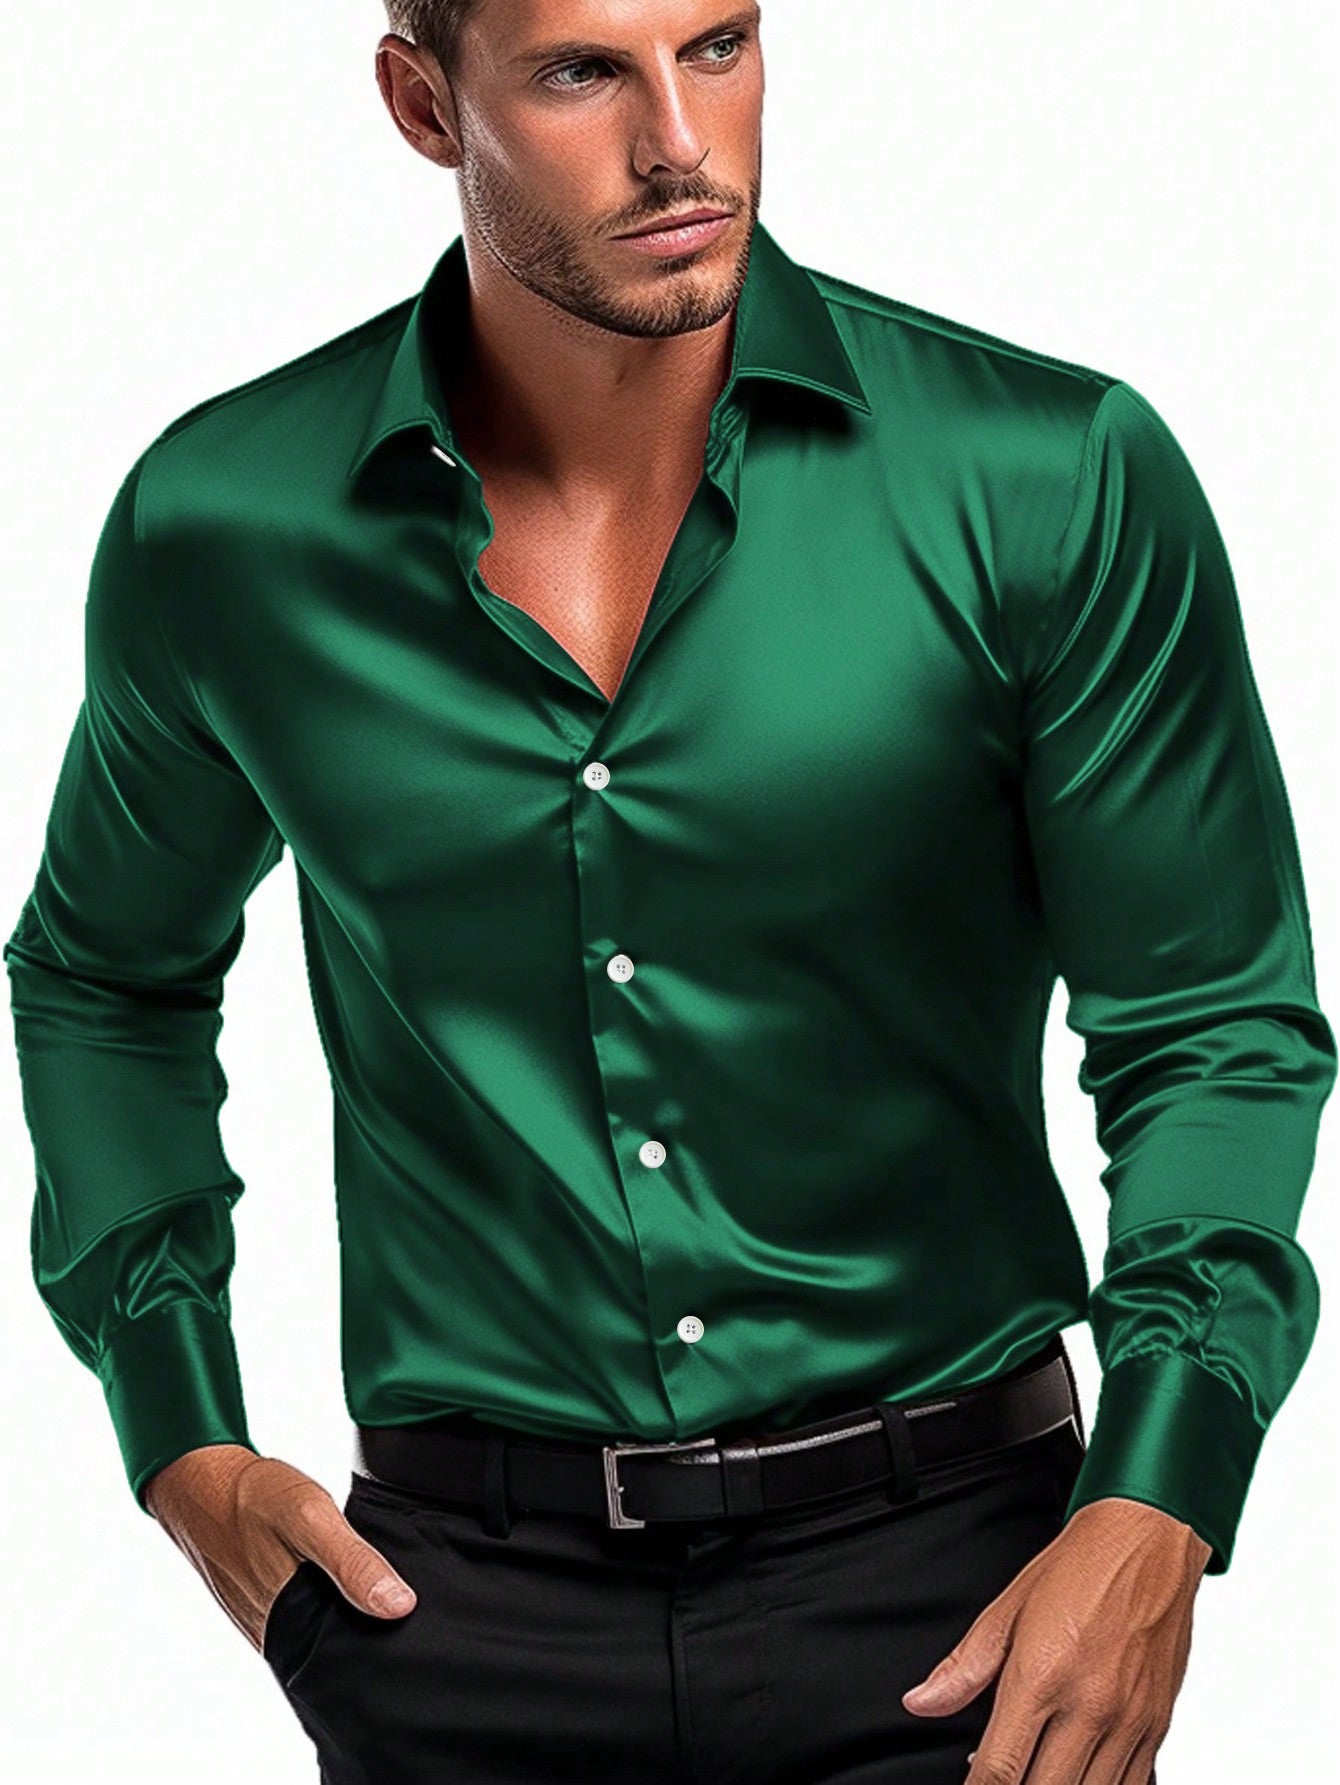 Men Solid Button Up Shirt